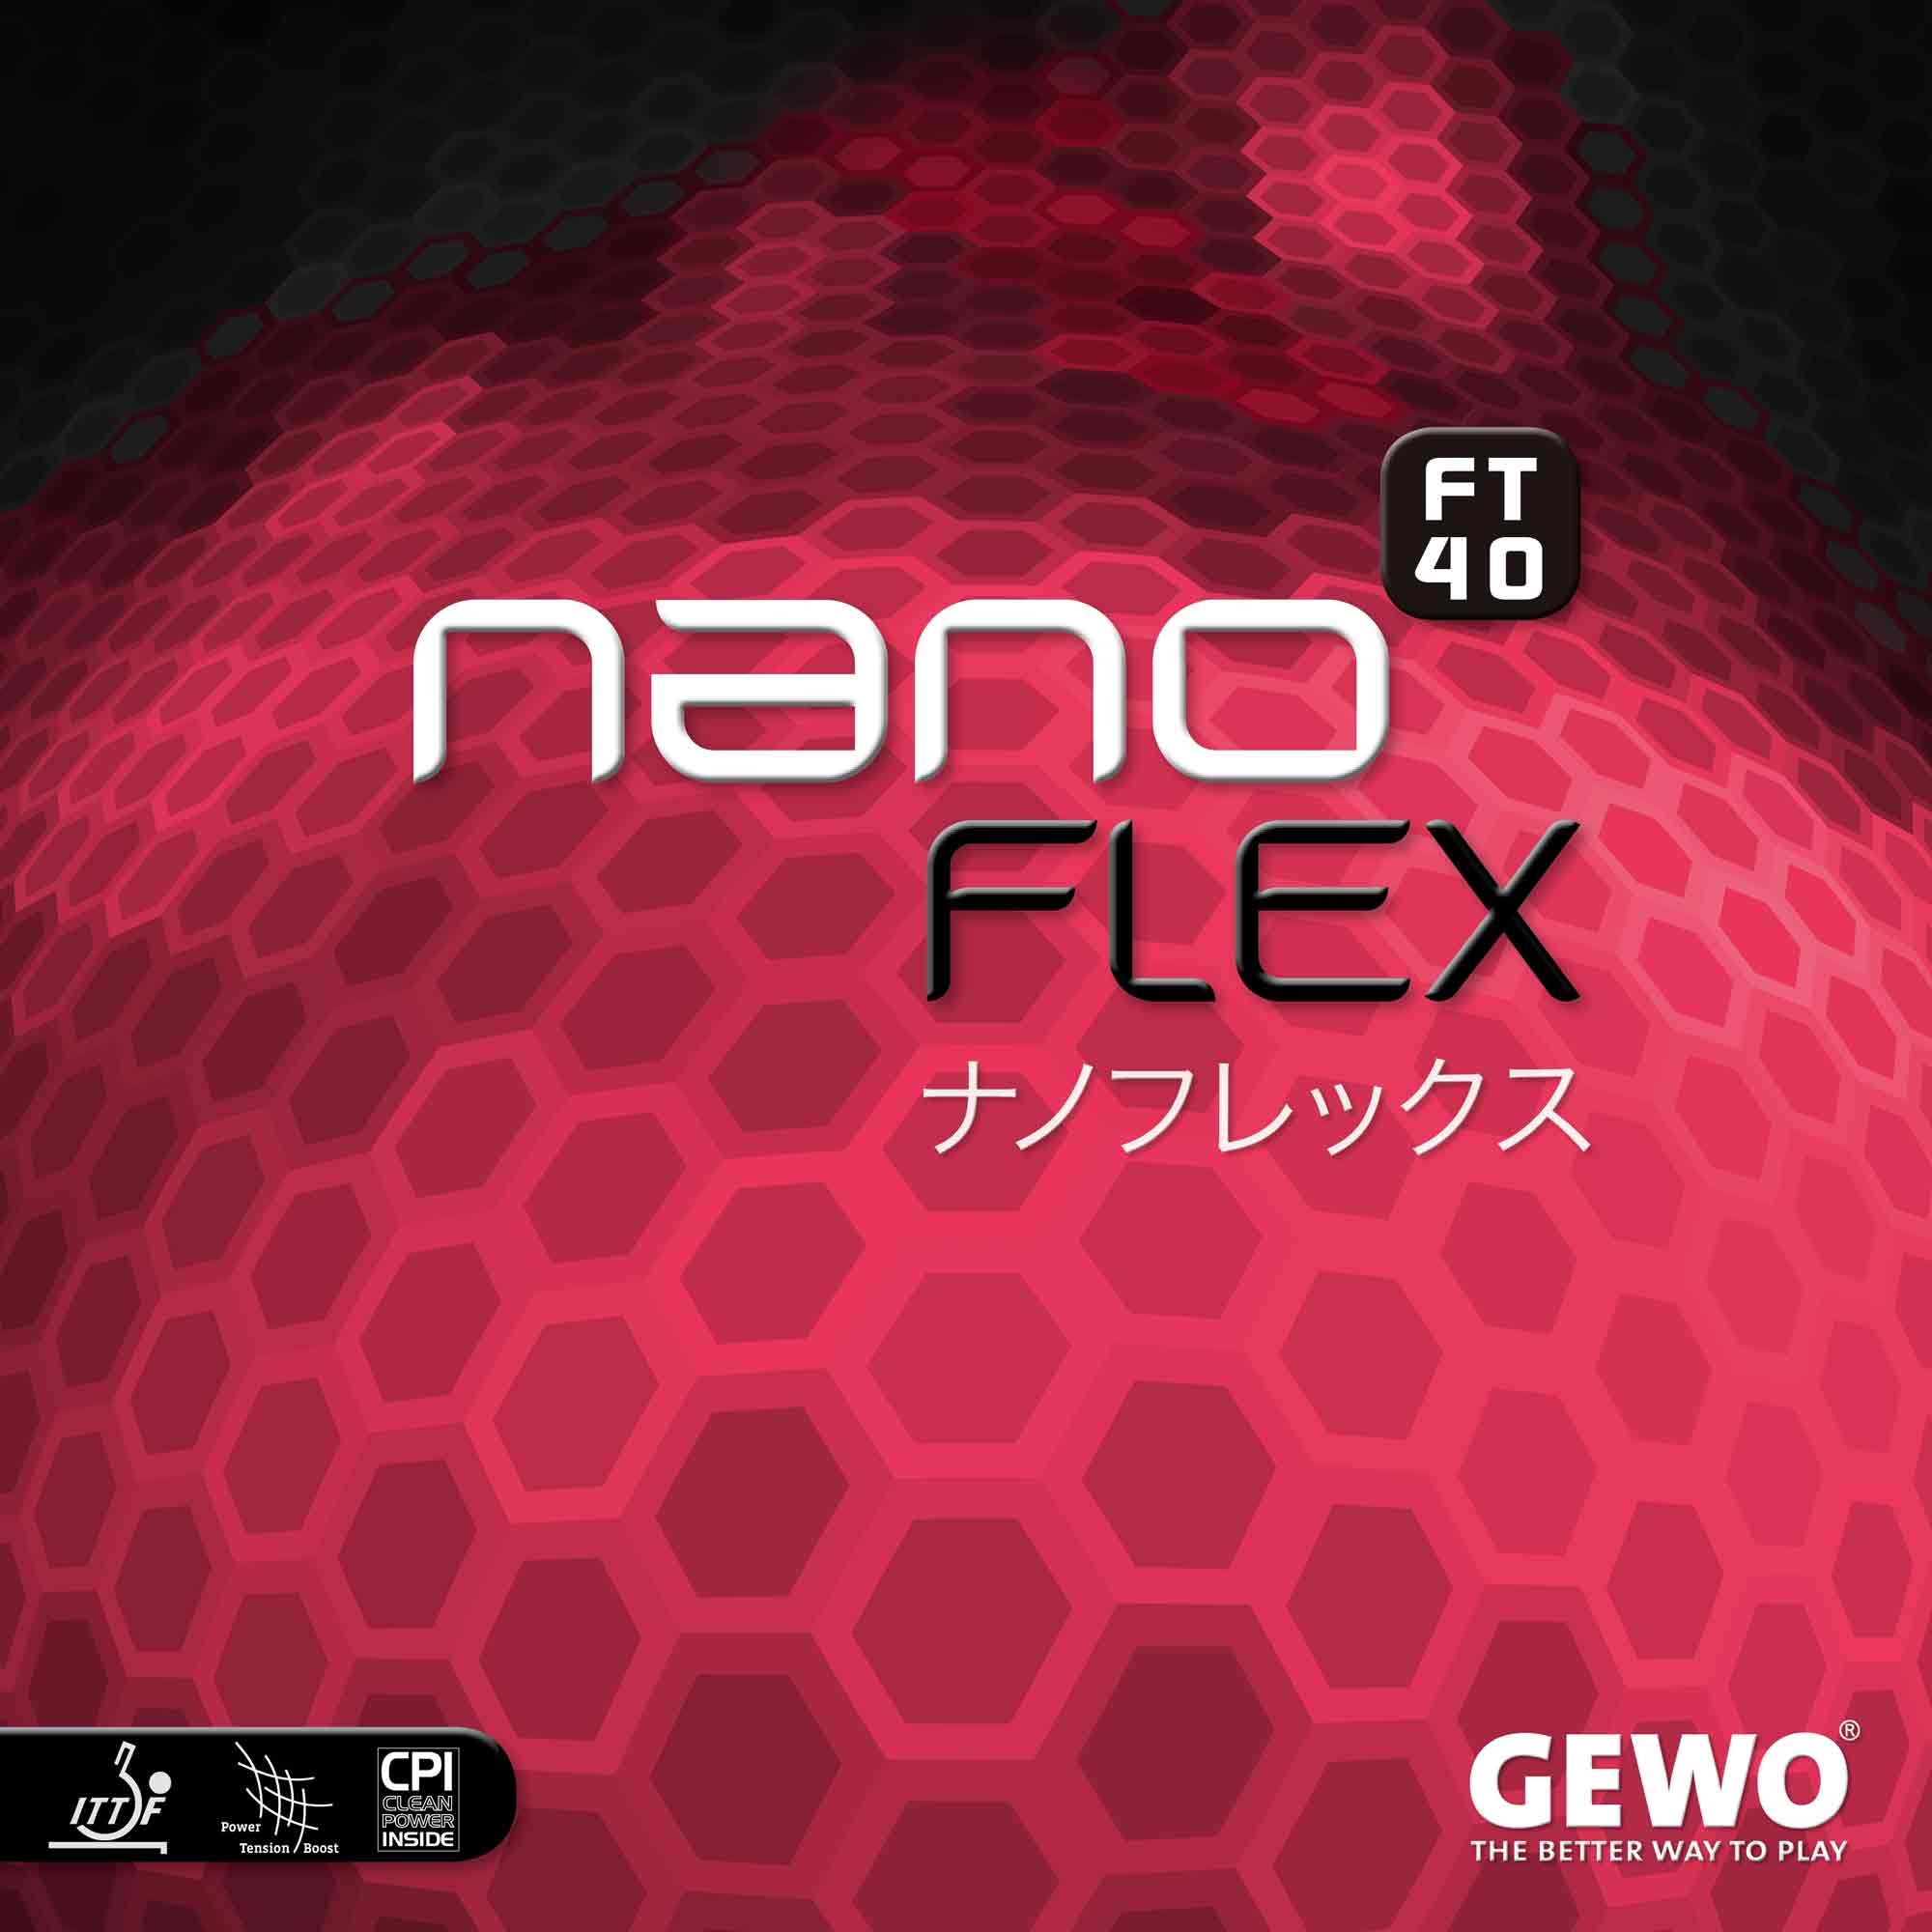 Gewo Rubber nanoFLEX FT40